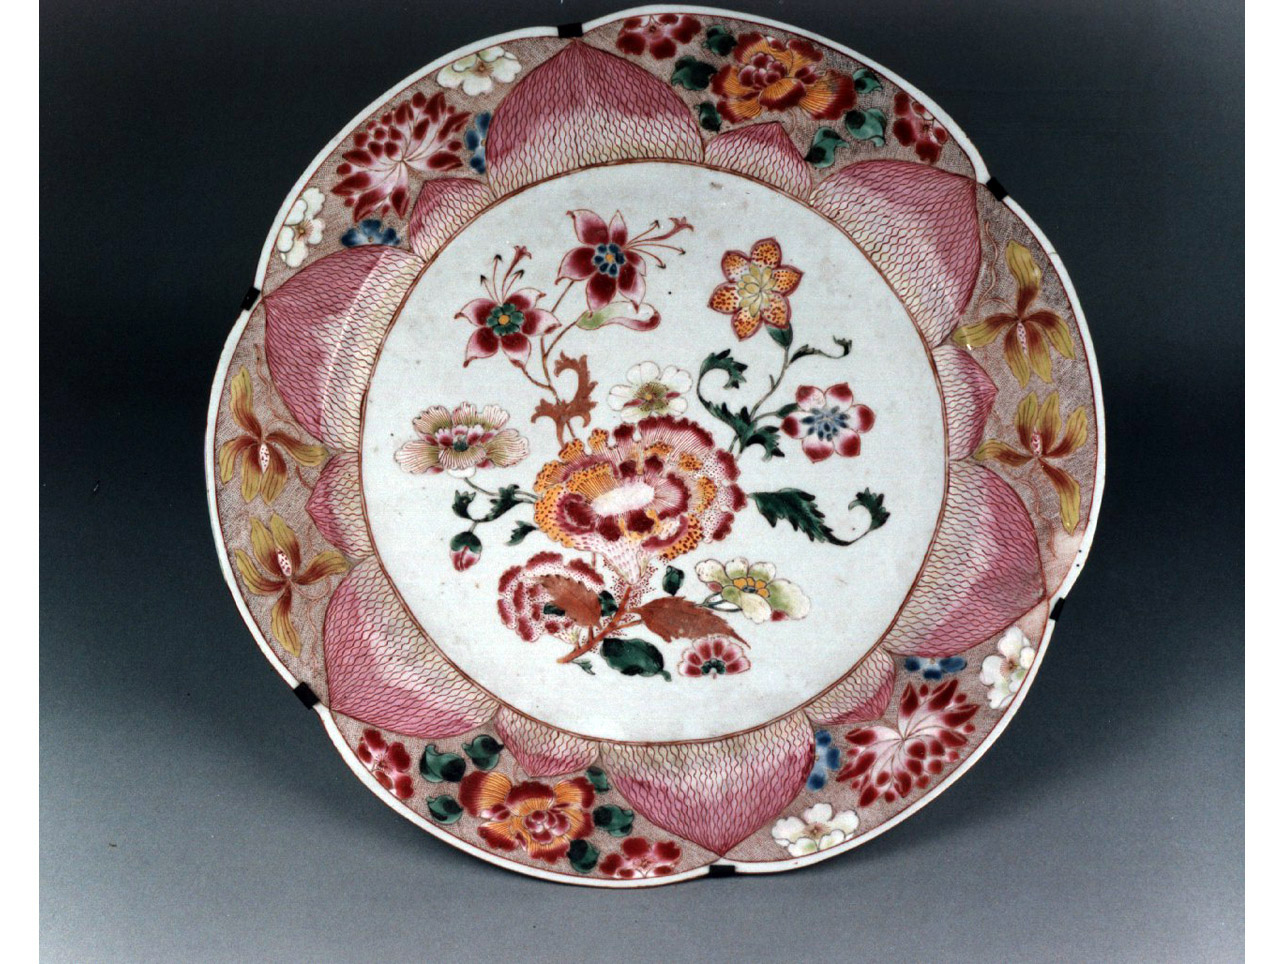 motivi decorativi floreali (piatto) - manifattura cinese (sec. XVIII)